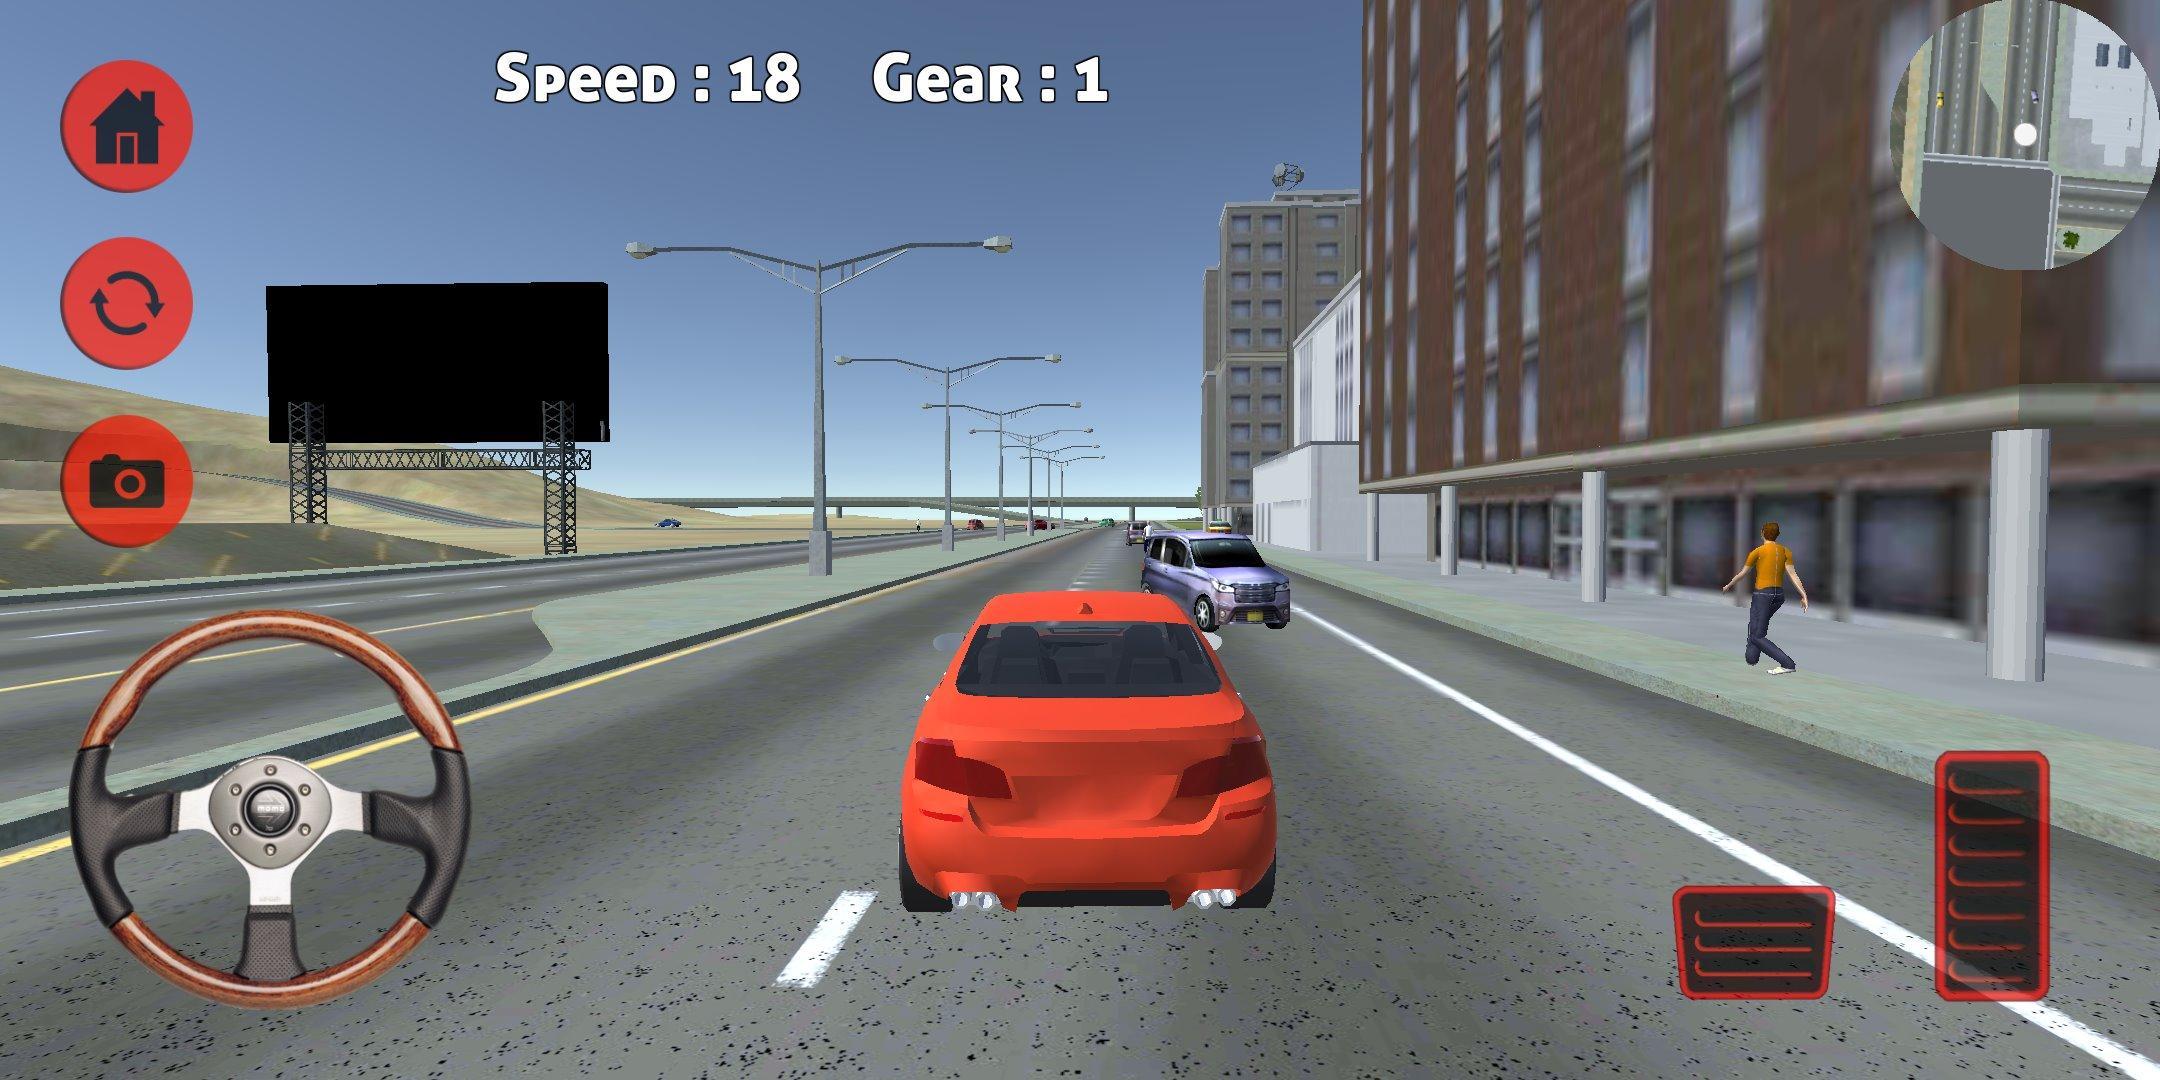 M5 E60 Driving Simulator 1.1 Screenshot 8